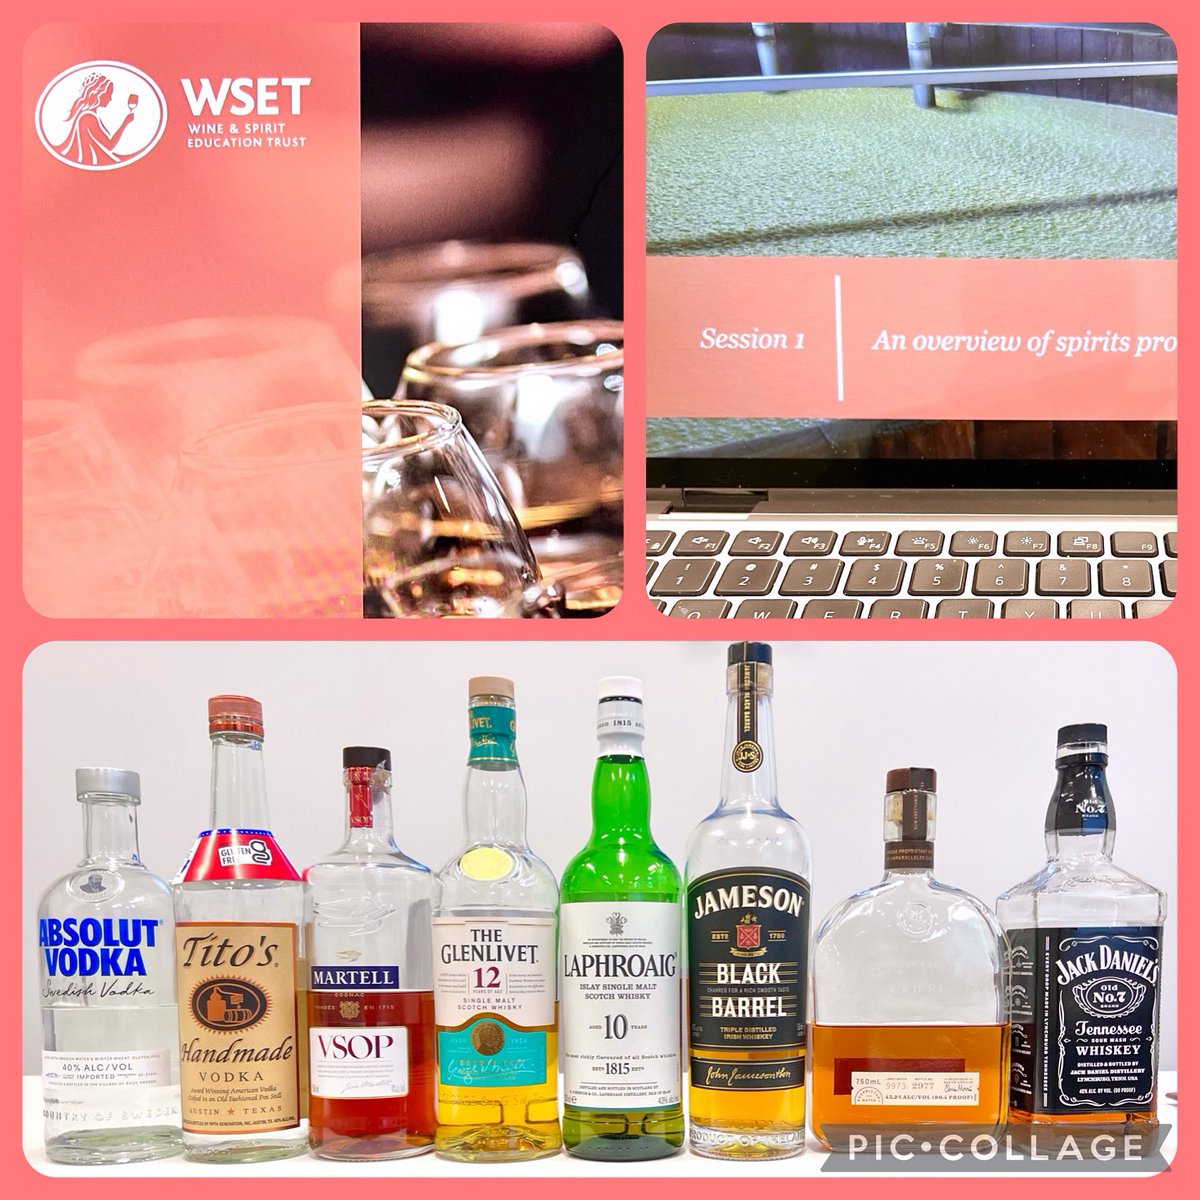 WSET Spirits class today!
Lectured on an overview of spirits production, Cognac, Vodka and Whisky/Whiskey. 

#wsetspirits #wsetglobal #wsetspiritseducator #wsetdiploma #vodka #cognac #whisky #whiskey #internationaldrinksspecialists #japanesecuisinegoodwillambassador #sakesamurai